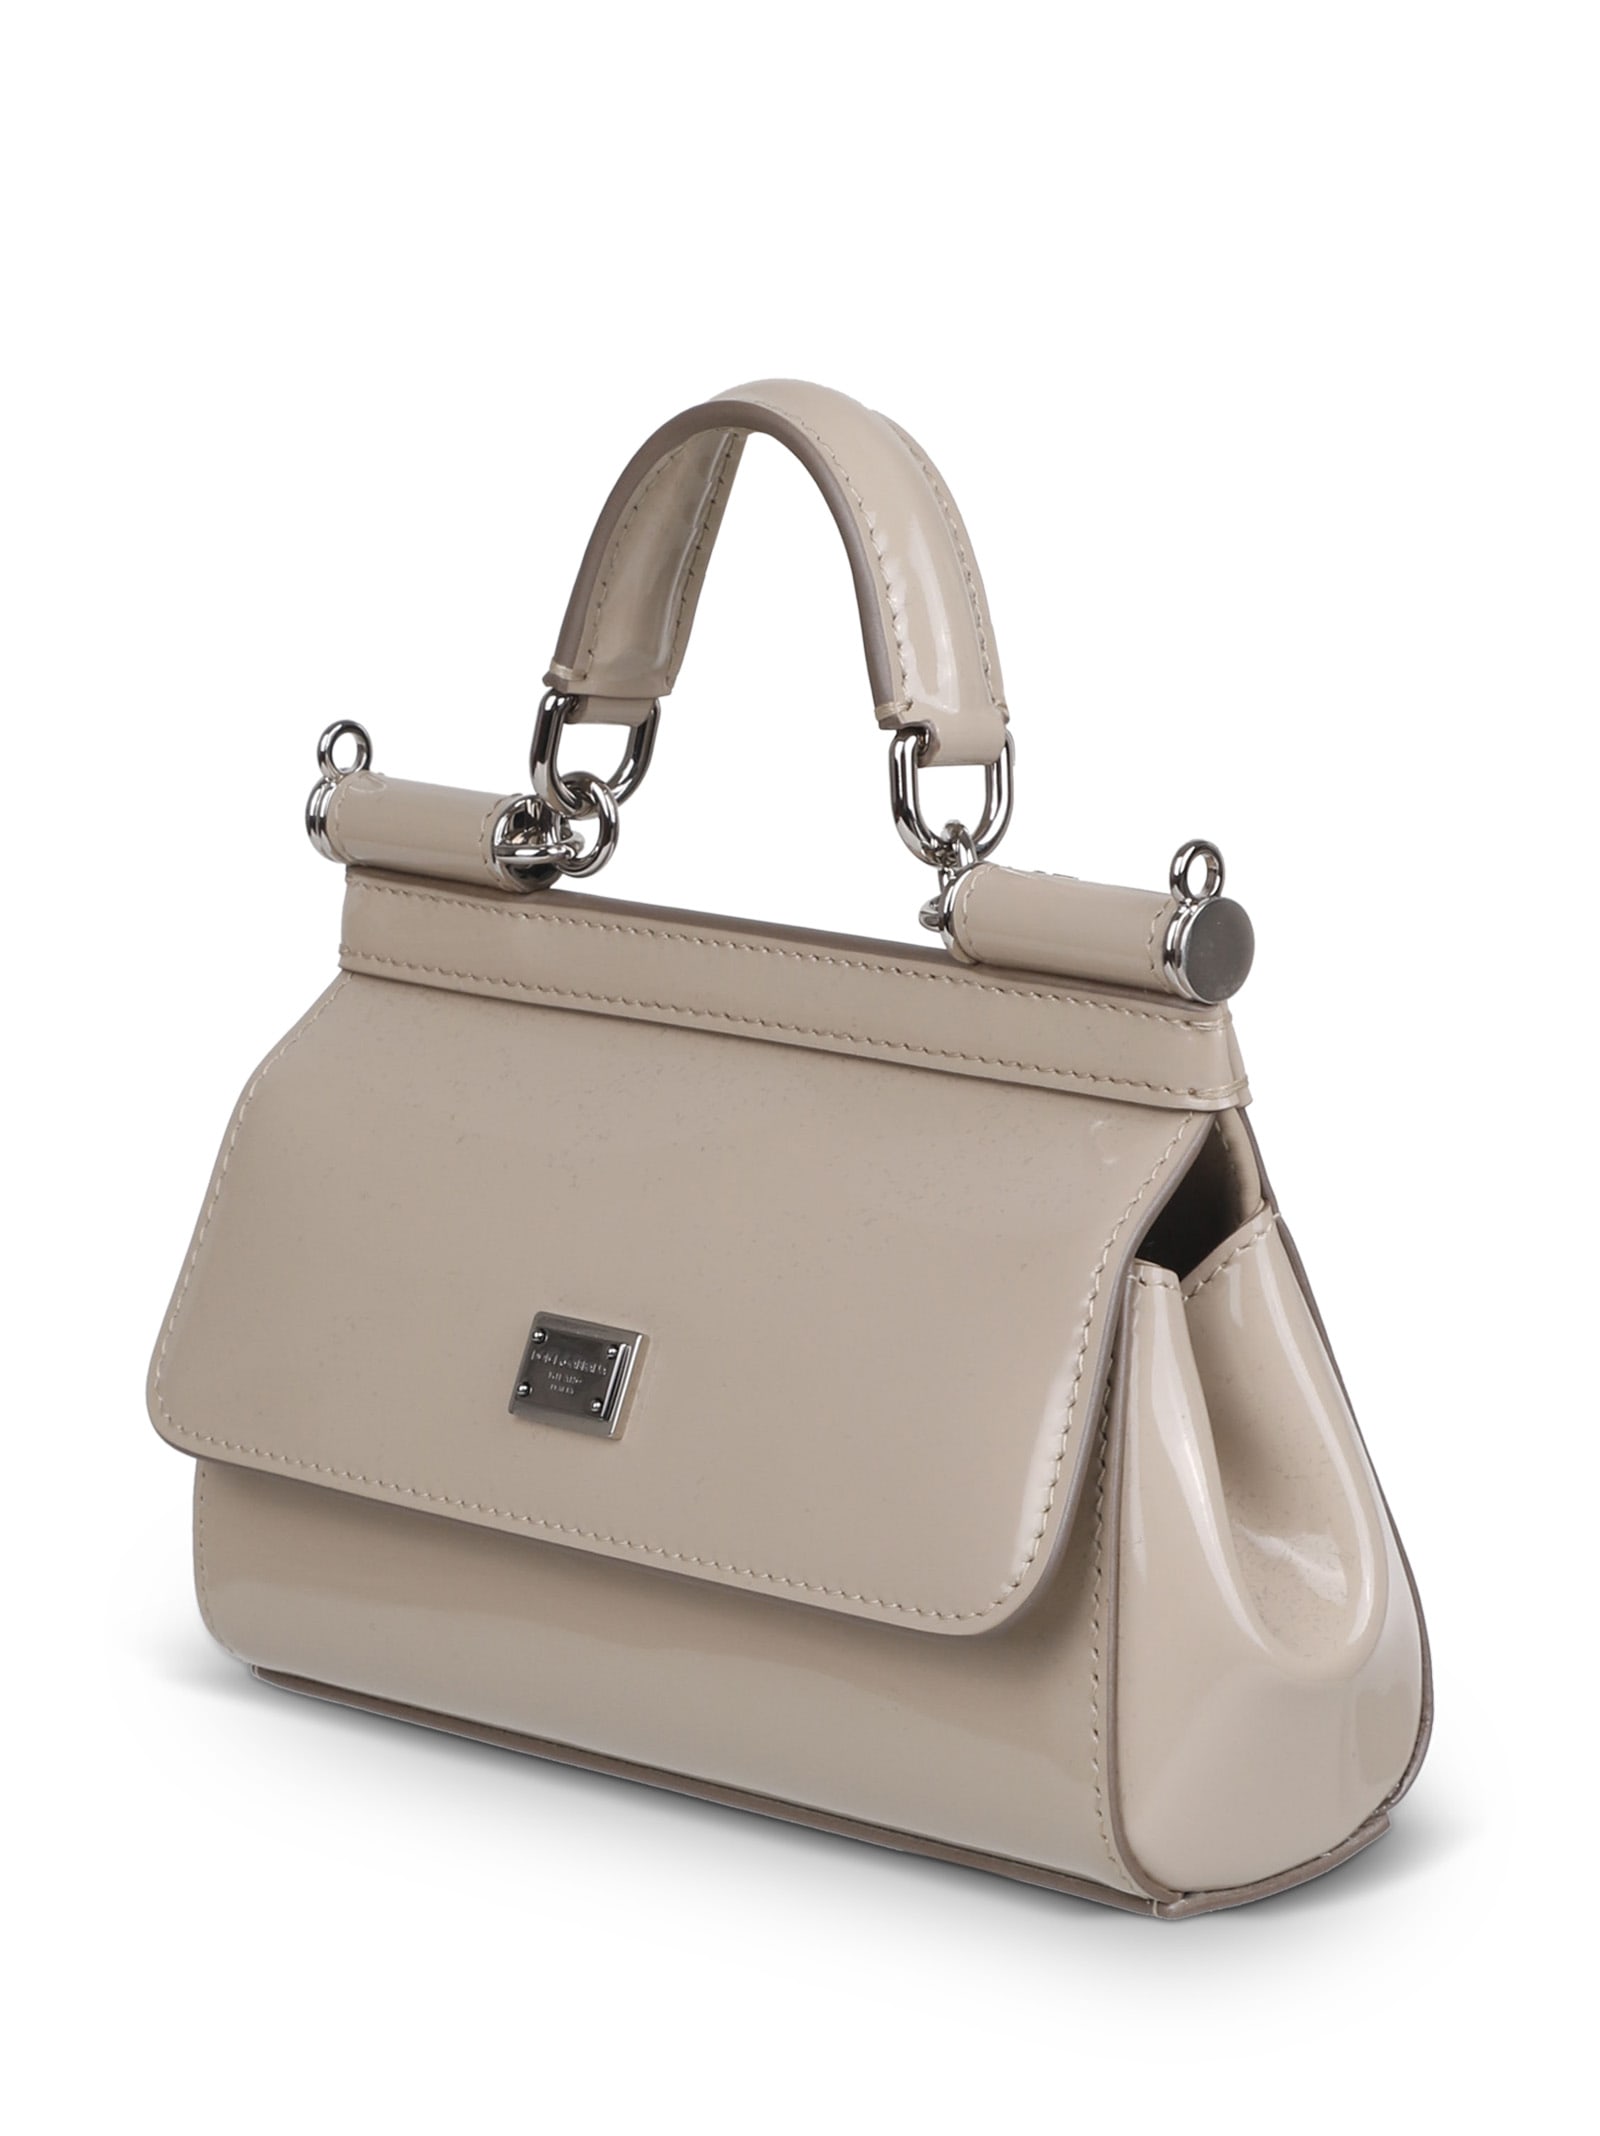 Kim Dolce & Gabbana Patent Sicily Bag